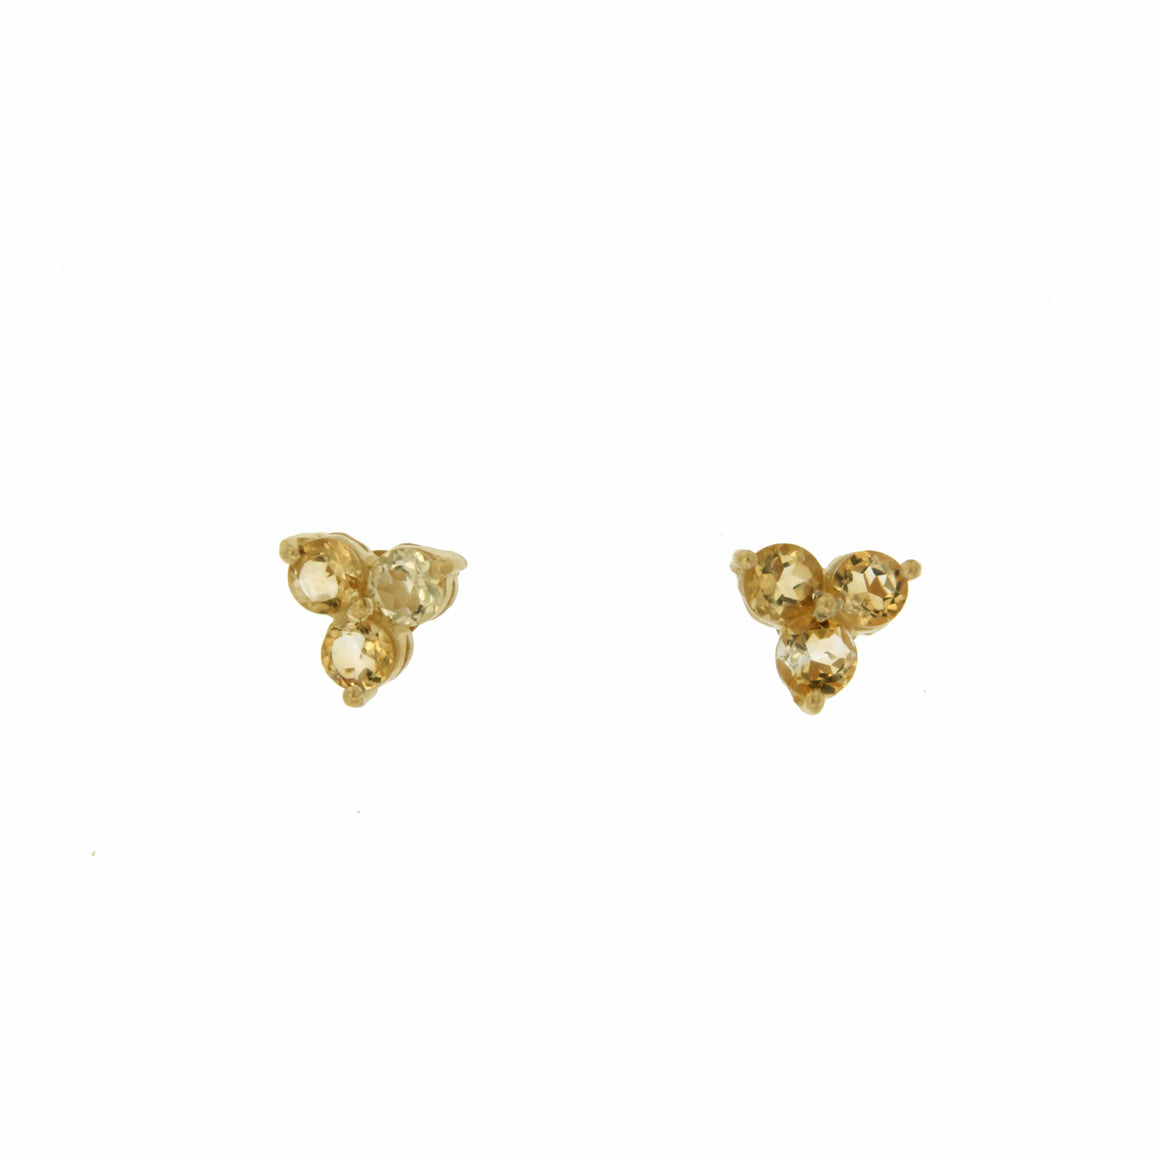 Manjusha Jewels earrings Sofia Flower Earring in Citrine